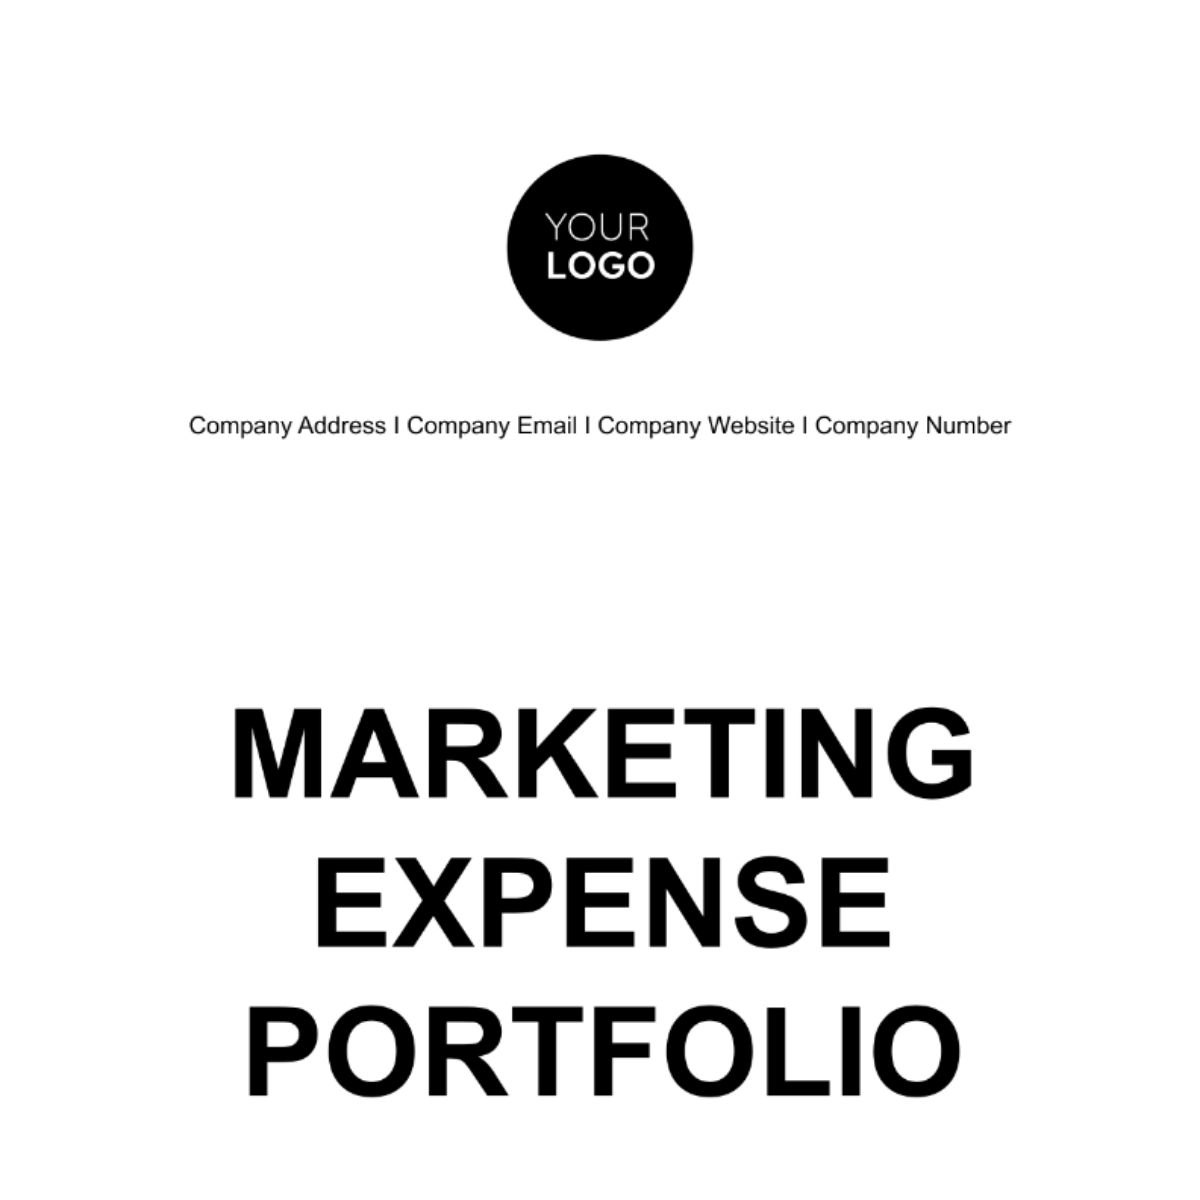 Marketing Expense Portfolio Template